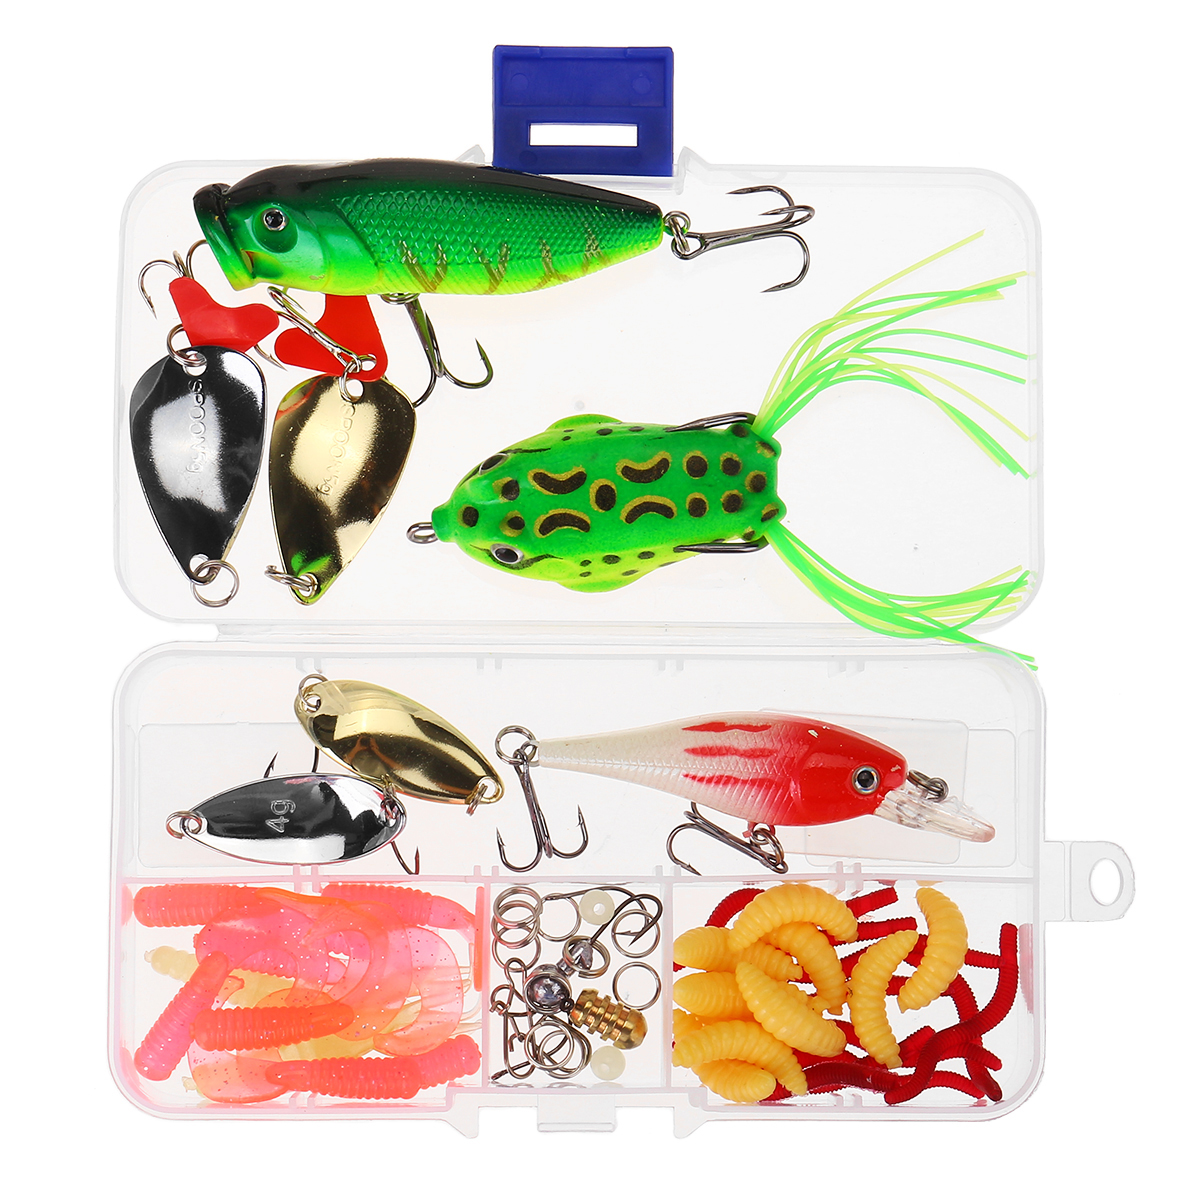 ZANLURE-1856106122164280-pcs-Fishing-Lures-Set-Multifunctional-Fishing-Accessories-Fishing-Bait-Set-1809890-7